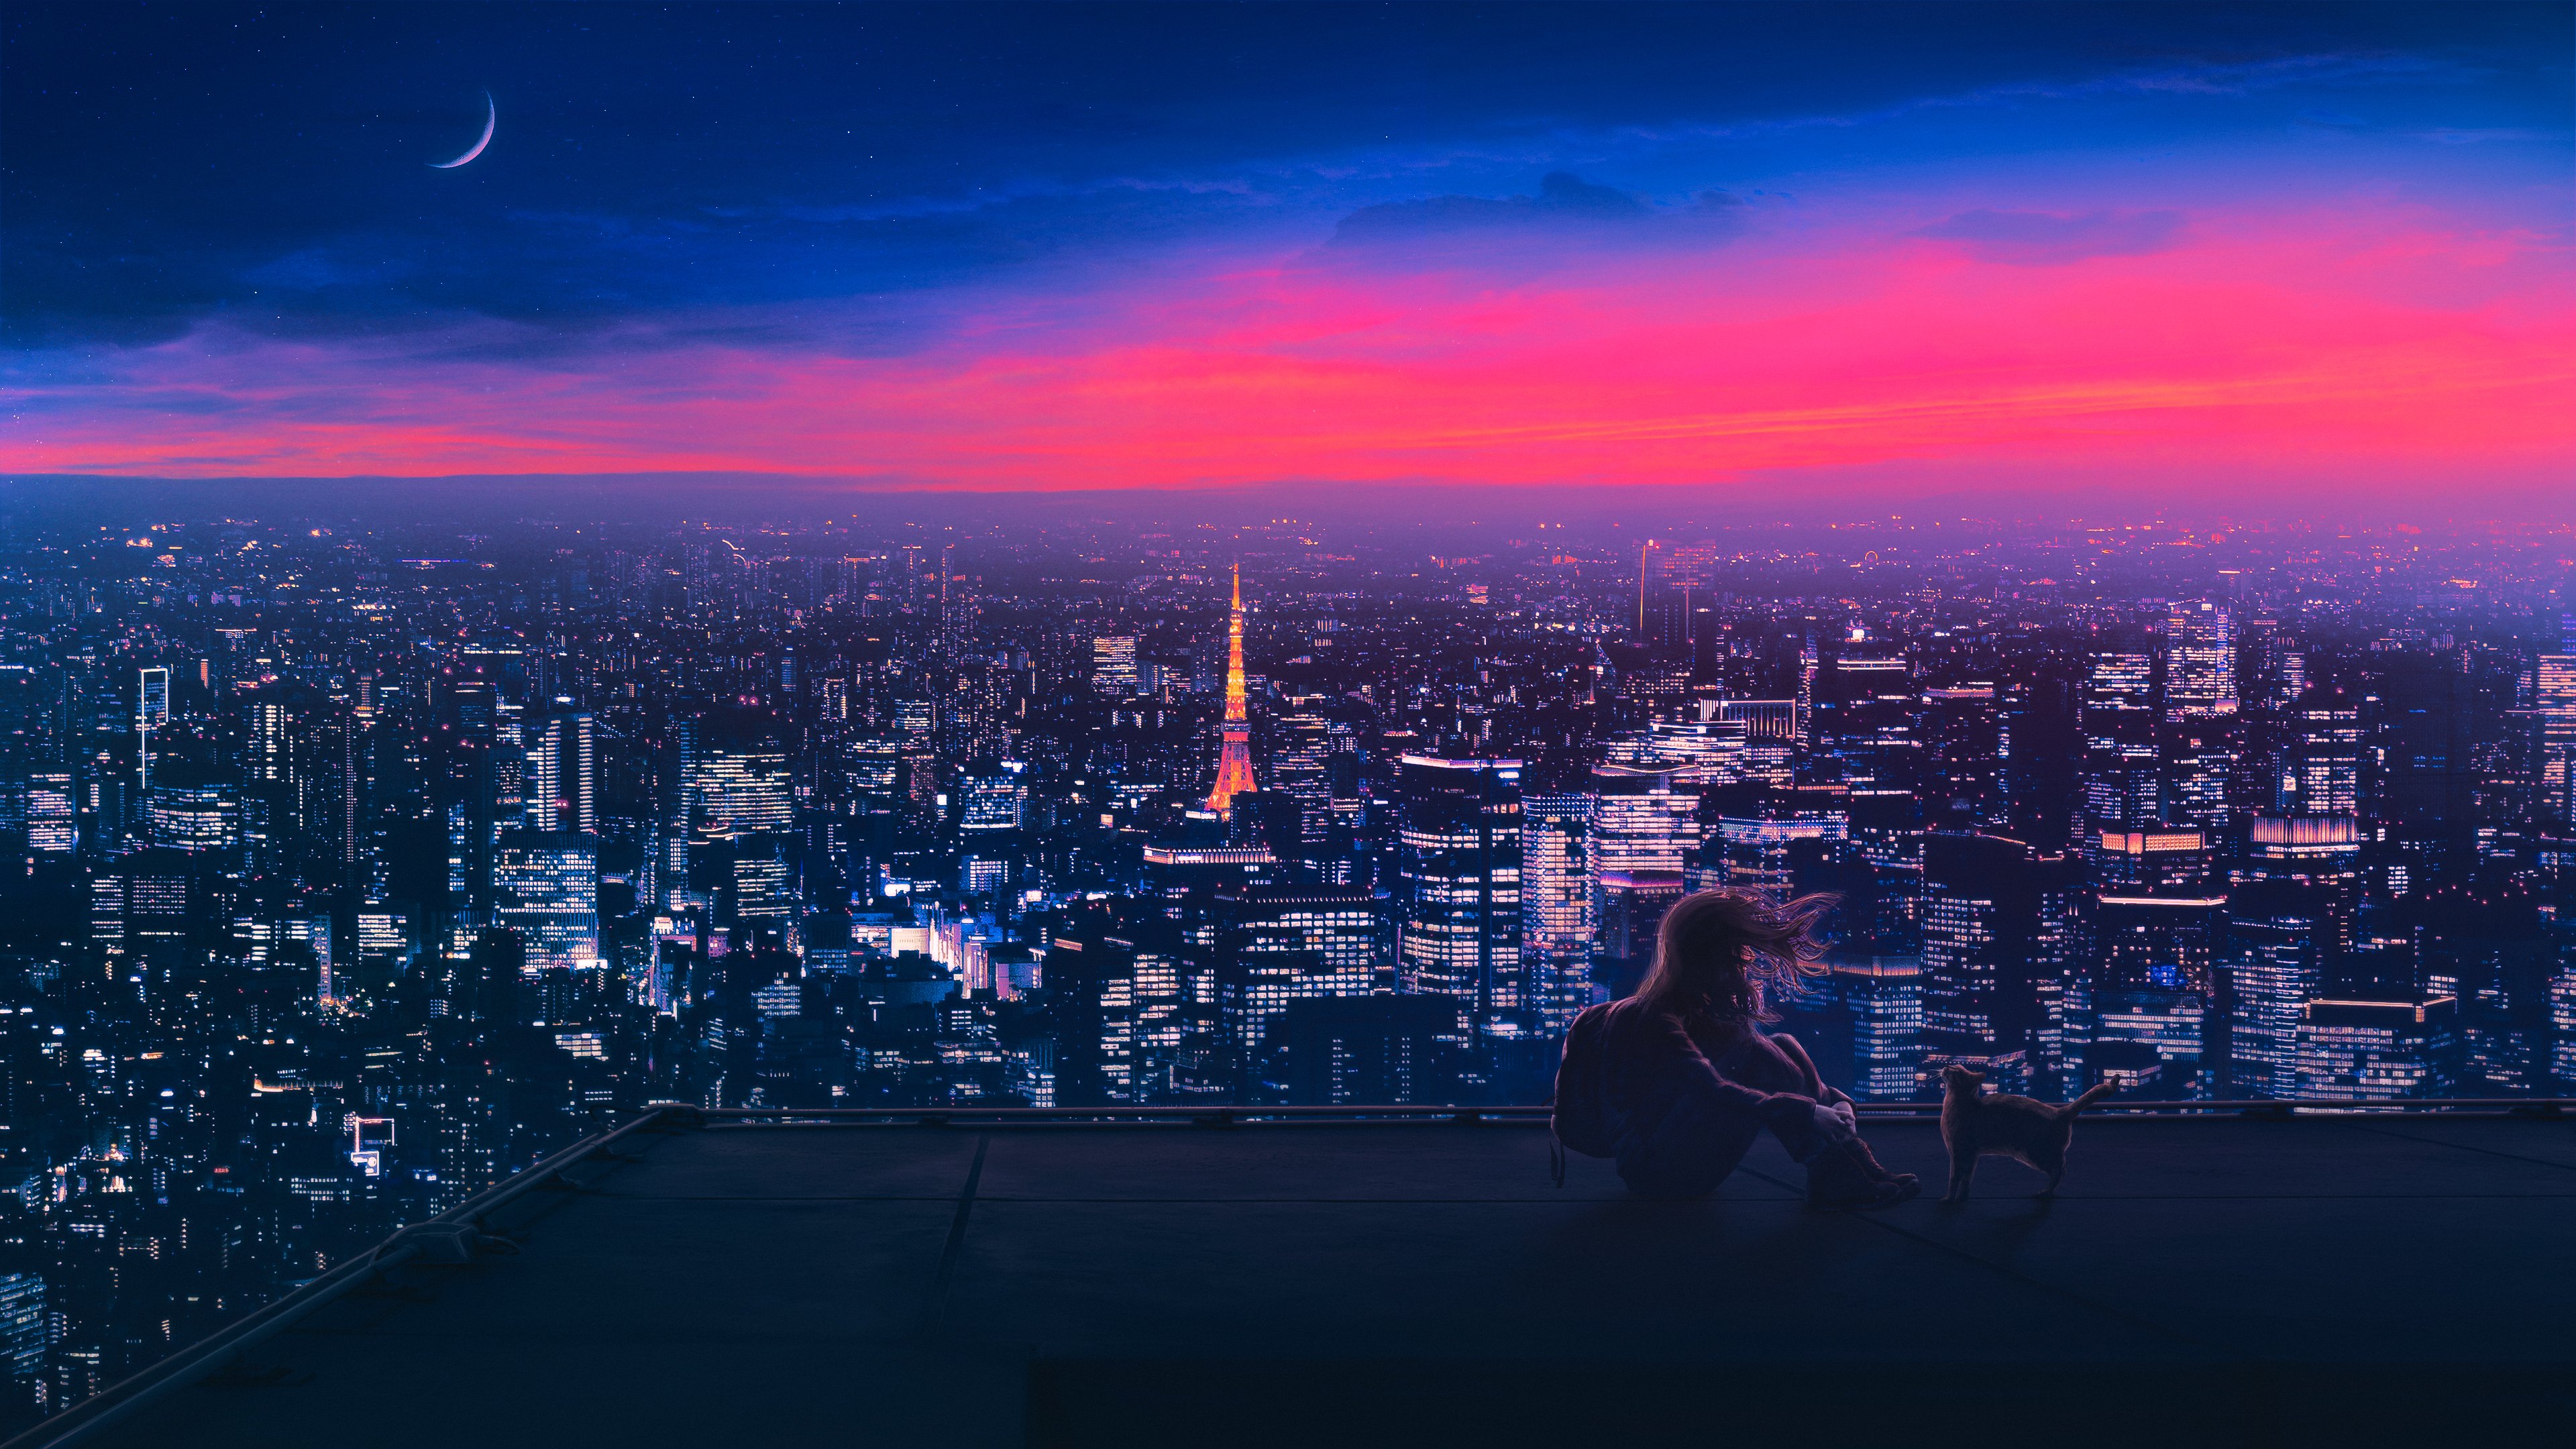 Digital Art Artwork Illustration City Cityscape Night Moon Sky Stars Rooftops Tokyo Cats Animals Wom 3840x2160